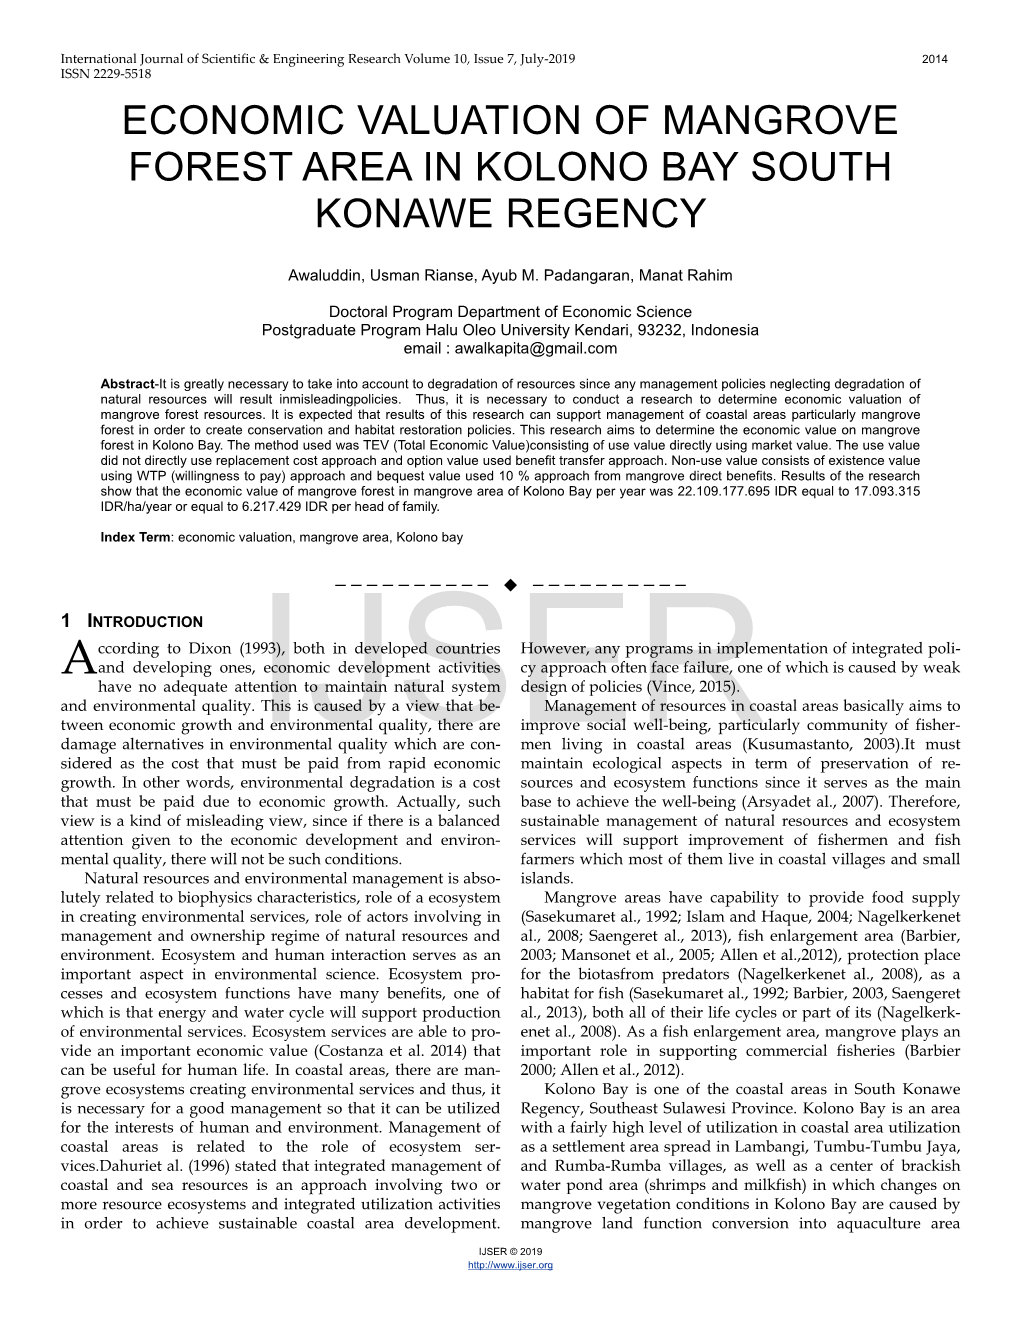 Economic Valuation of Mangrove Forest Area in Kolono Bay South Konawe Regency